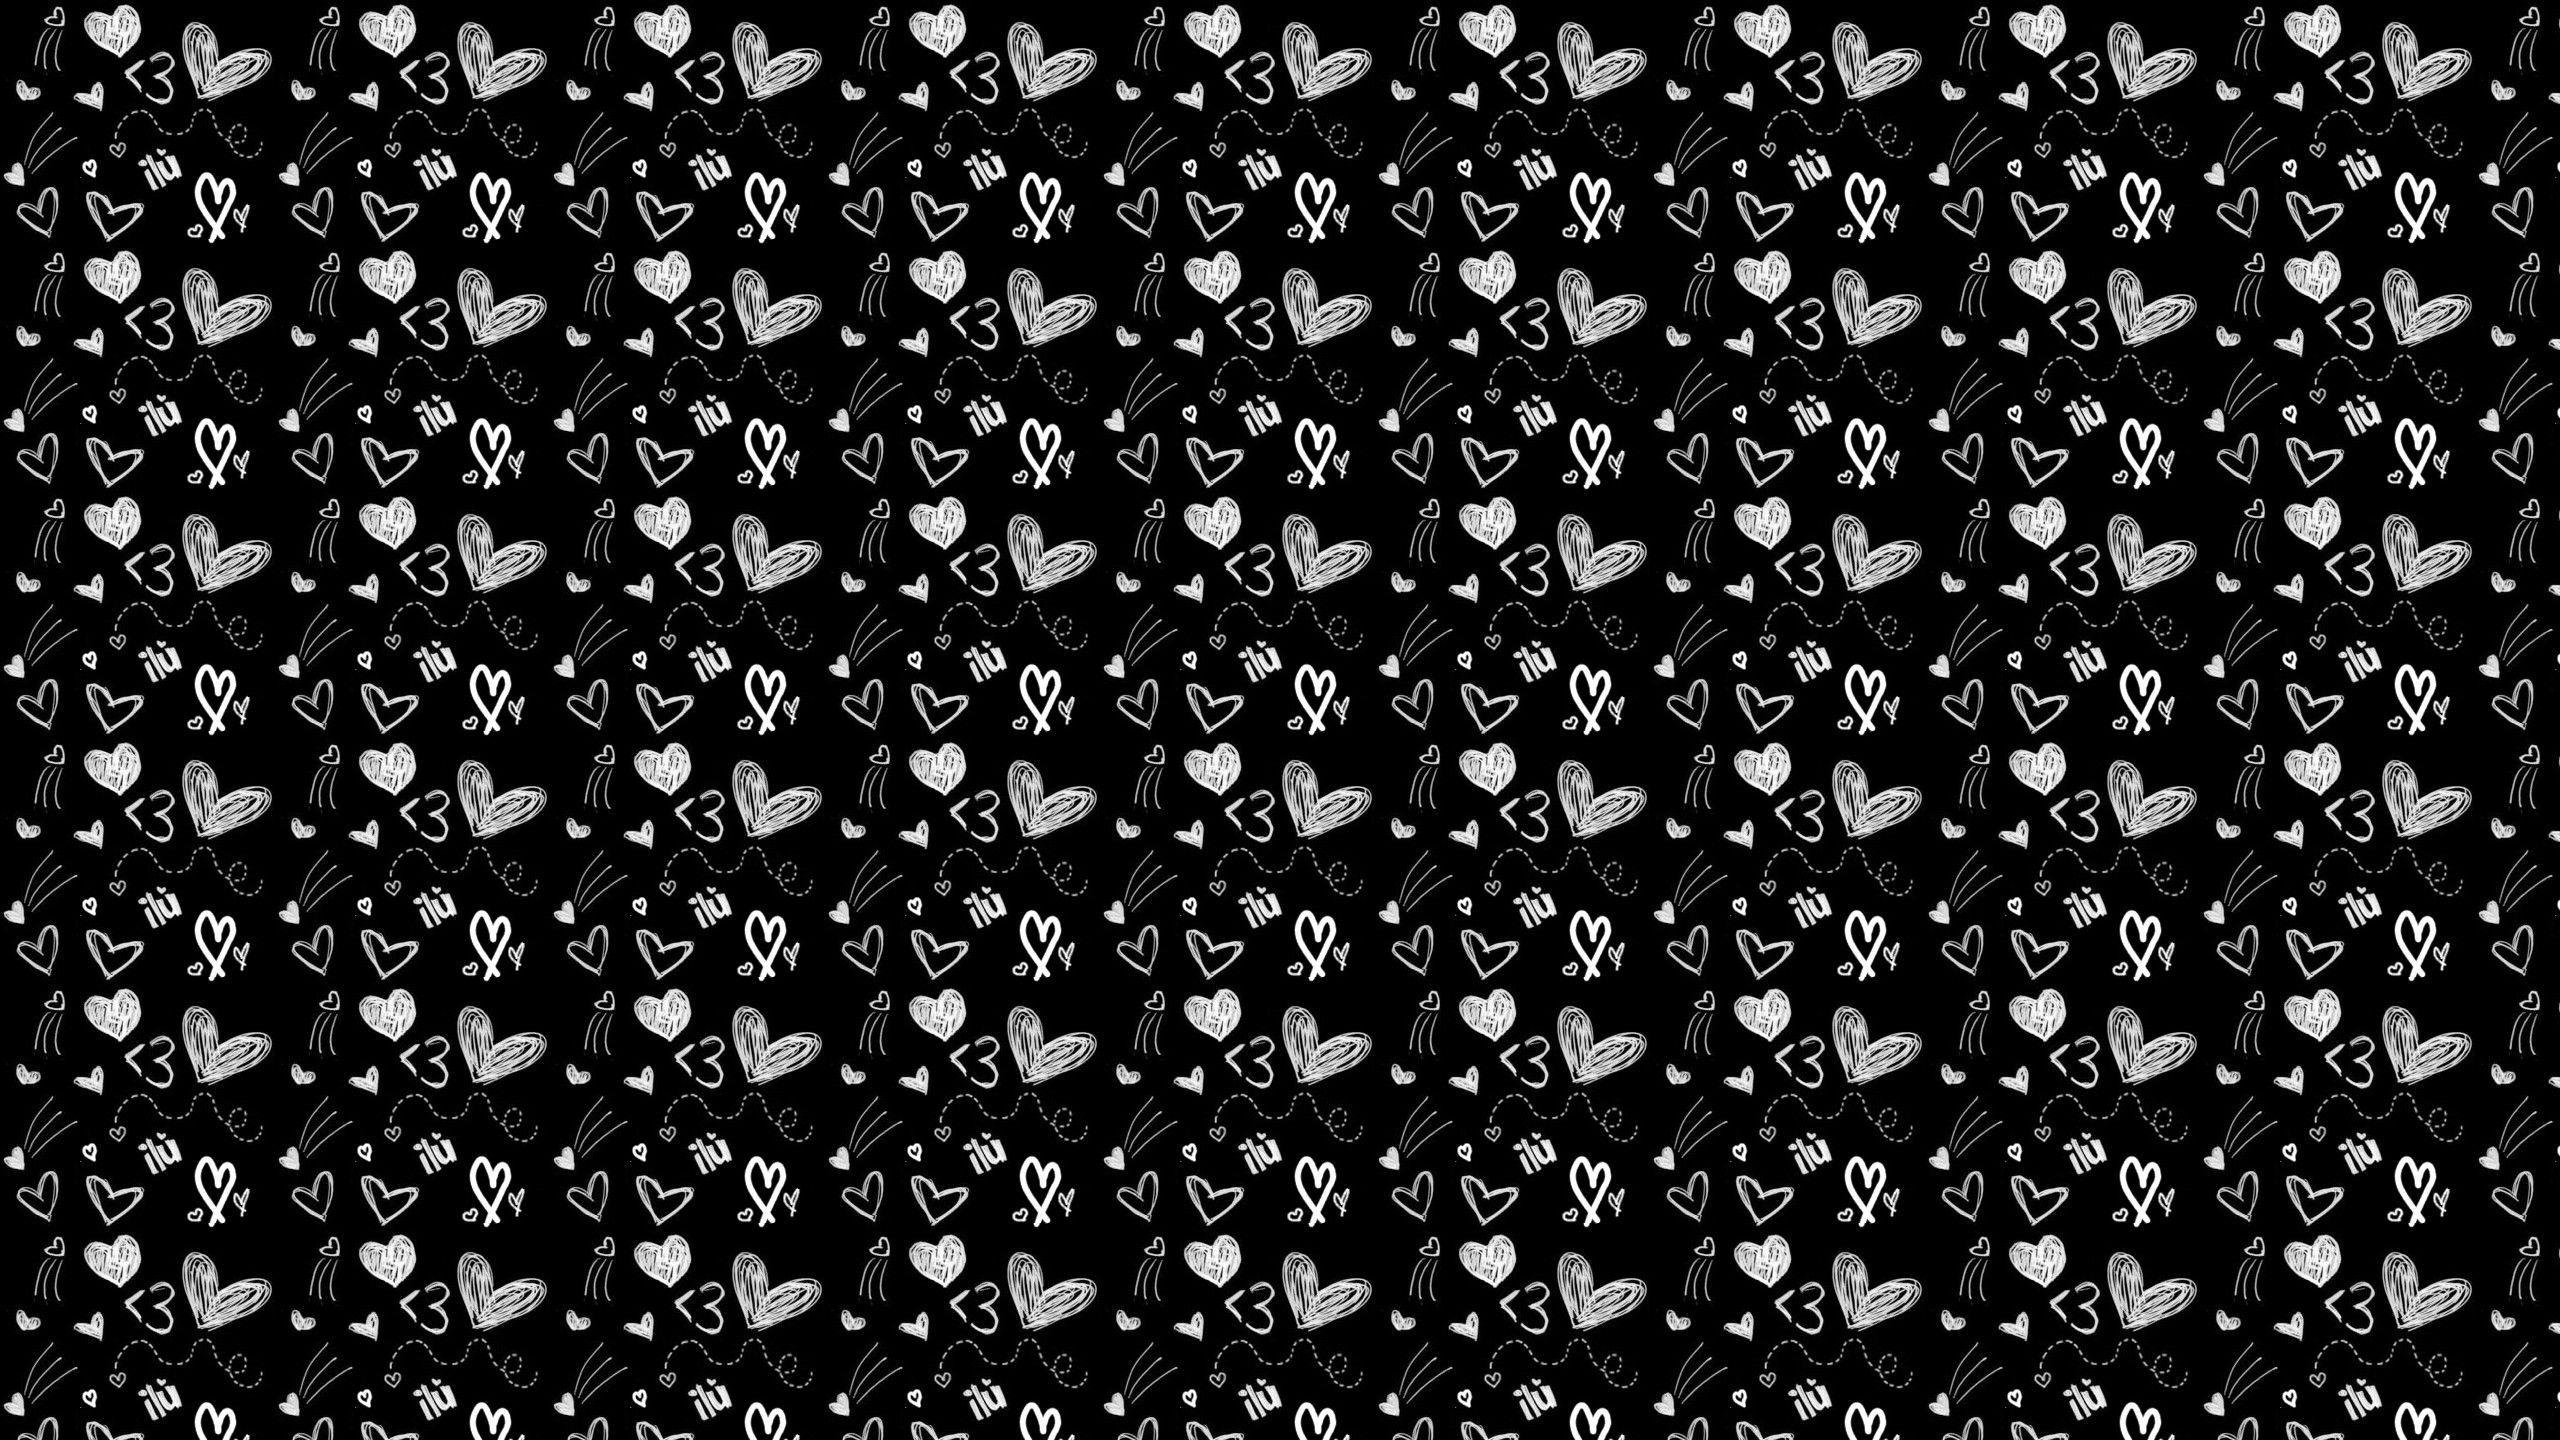 chrome hearts wallpaper  Chrome hearts Heart wallpaper Apple watch faces